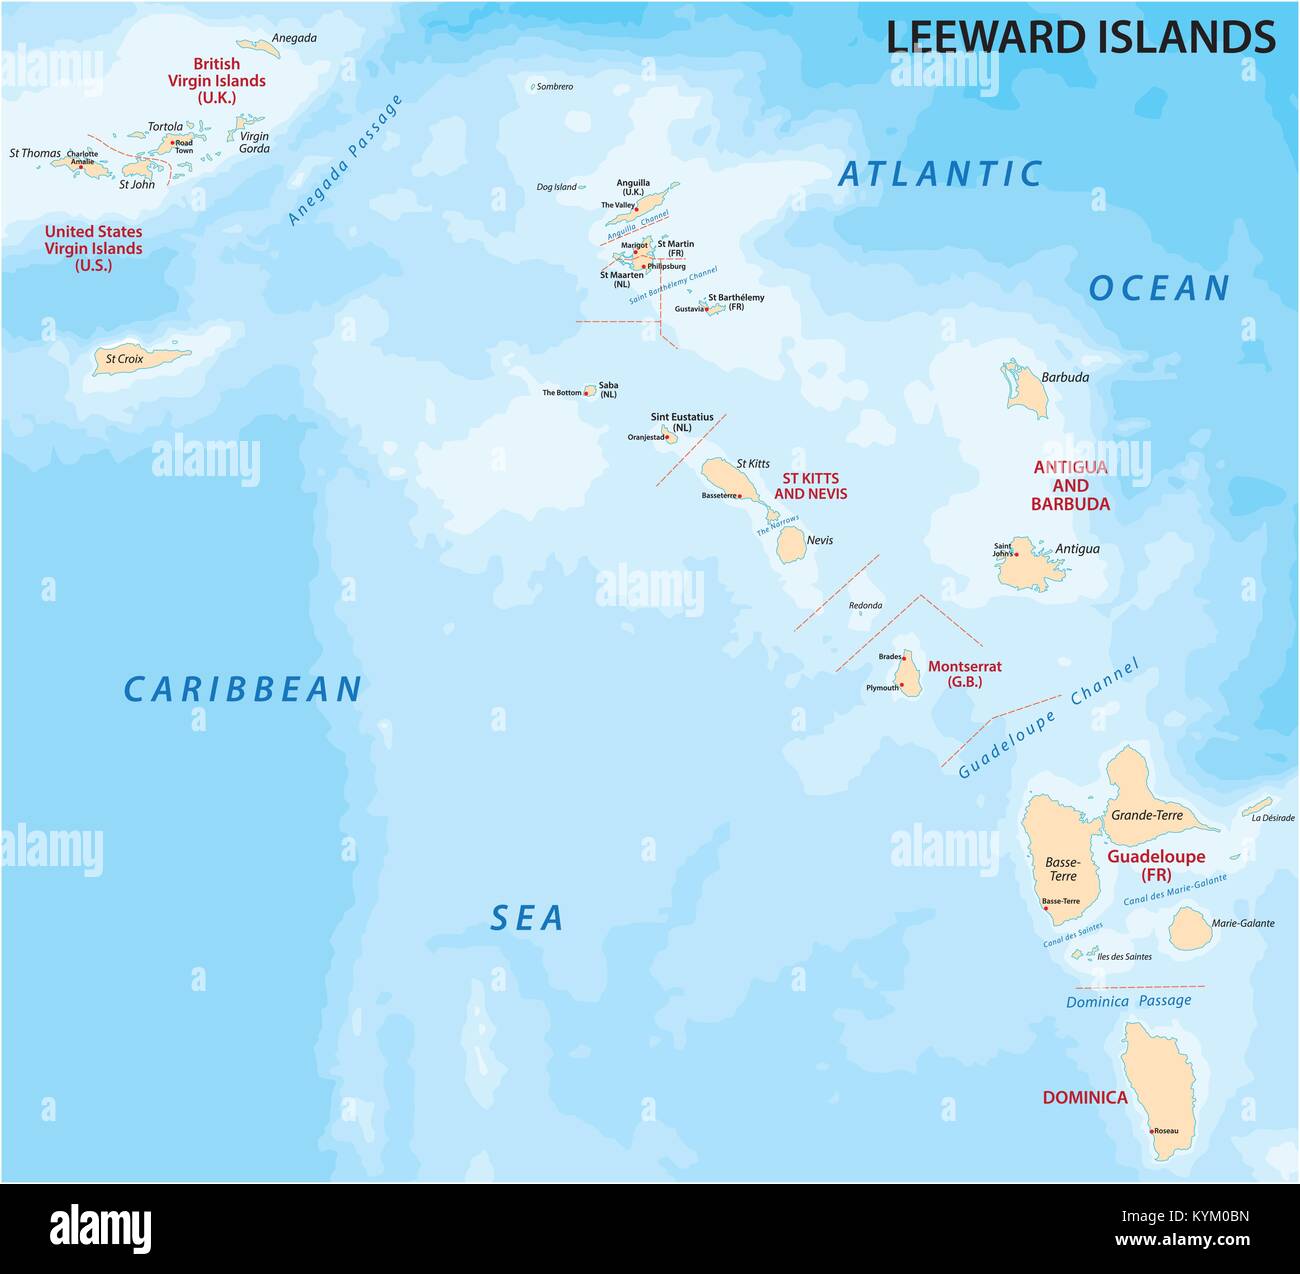 Map of leeward islands, Caribbean island group Stock Vector